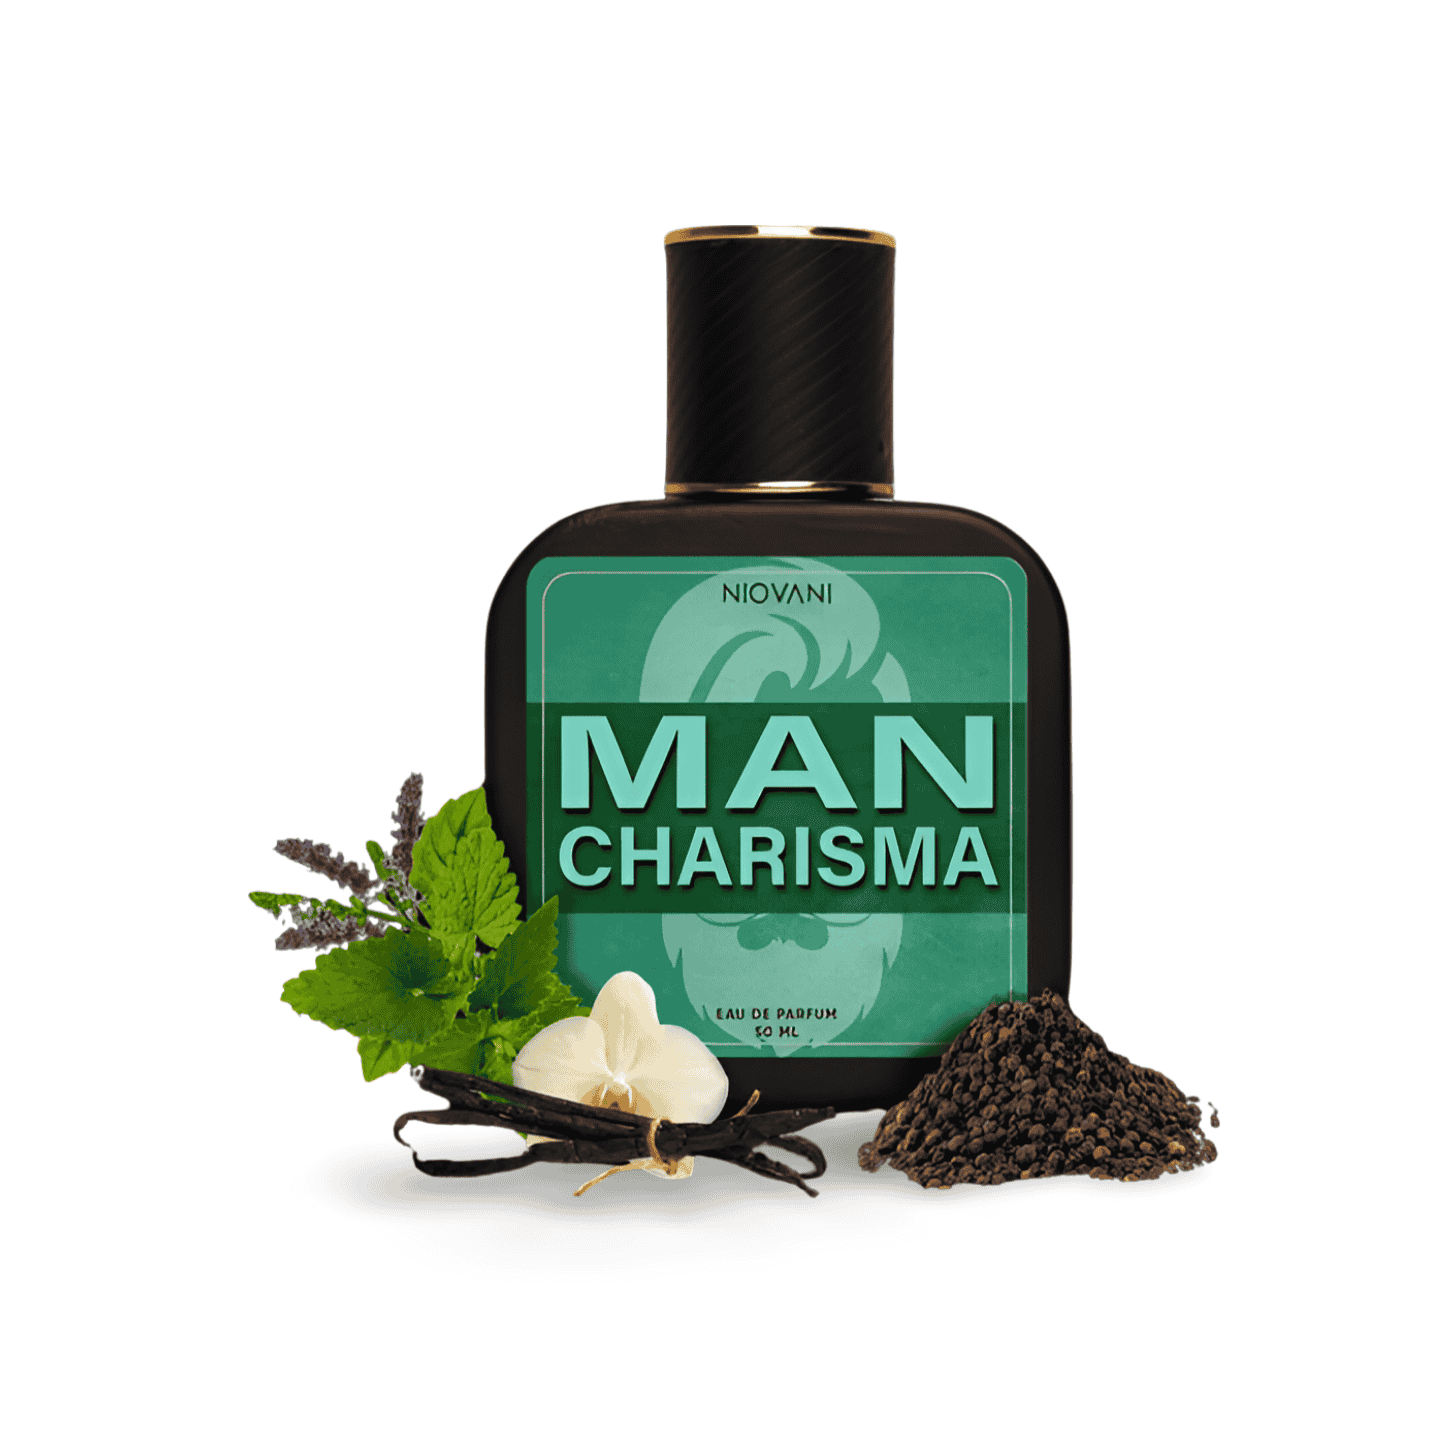 Niovani Man Charisma Perfume